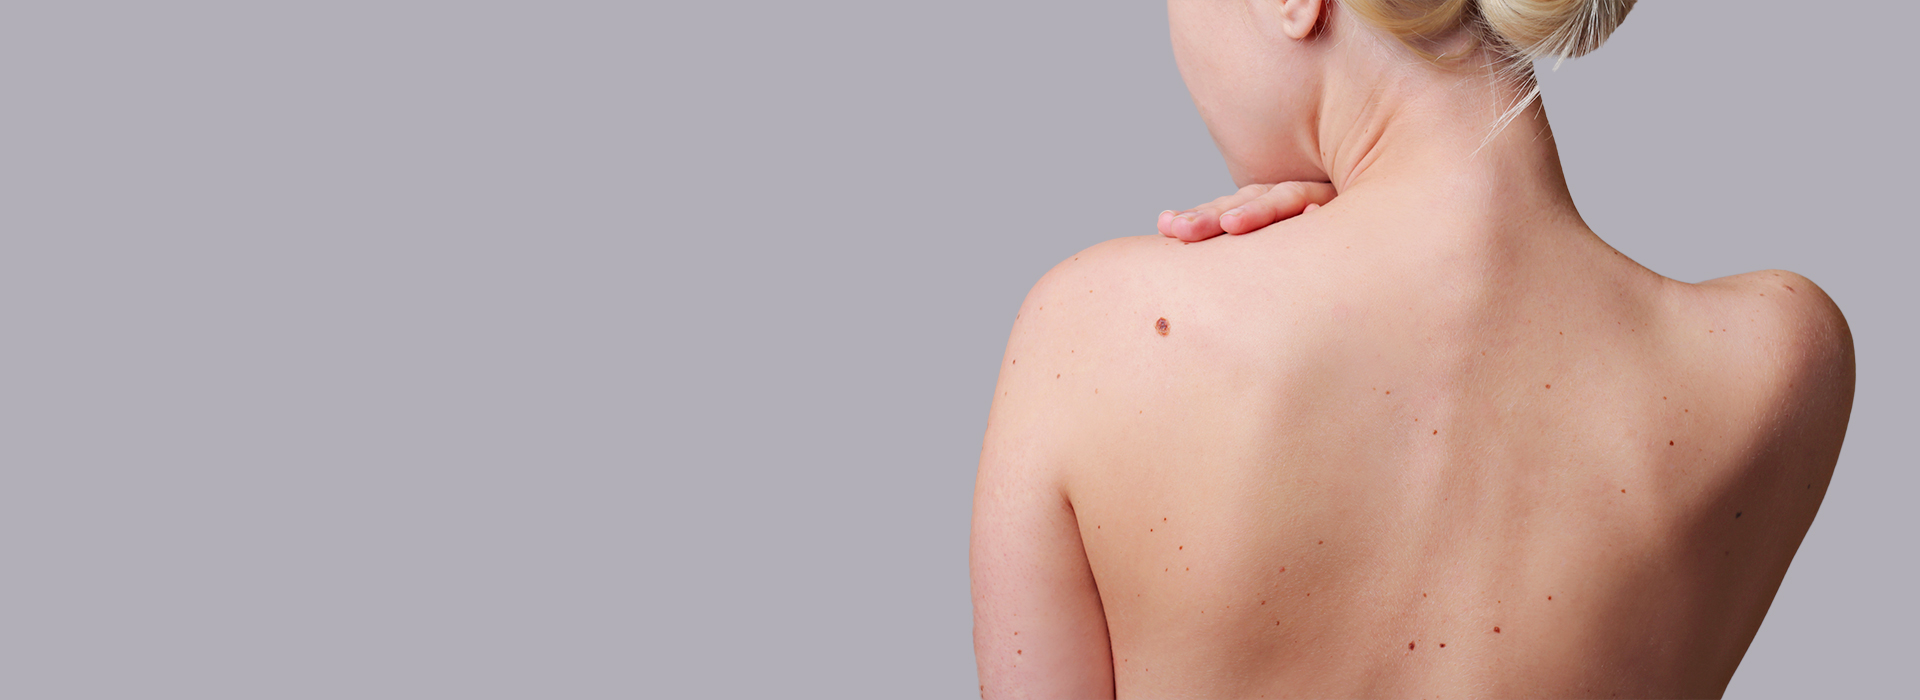 Skin cancer screening / birthmarks